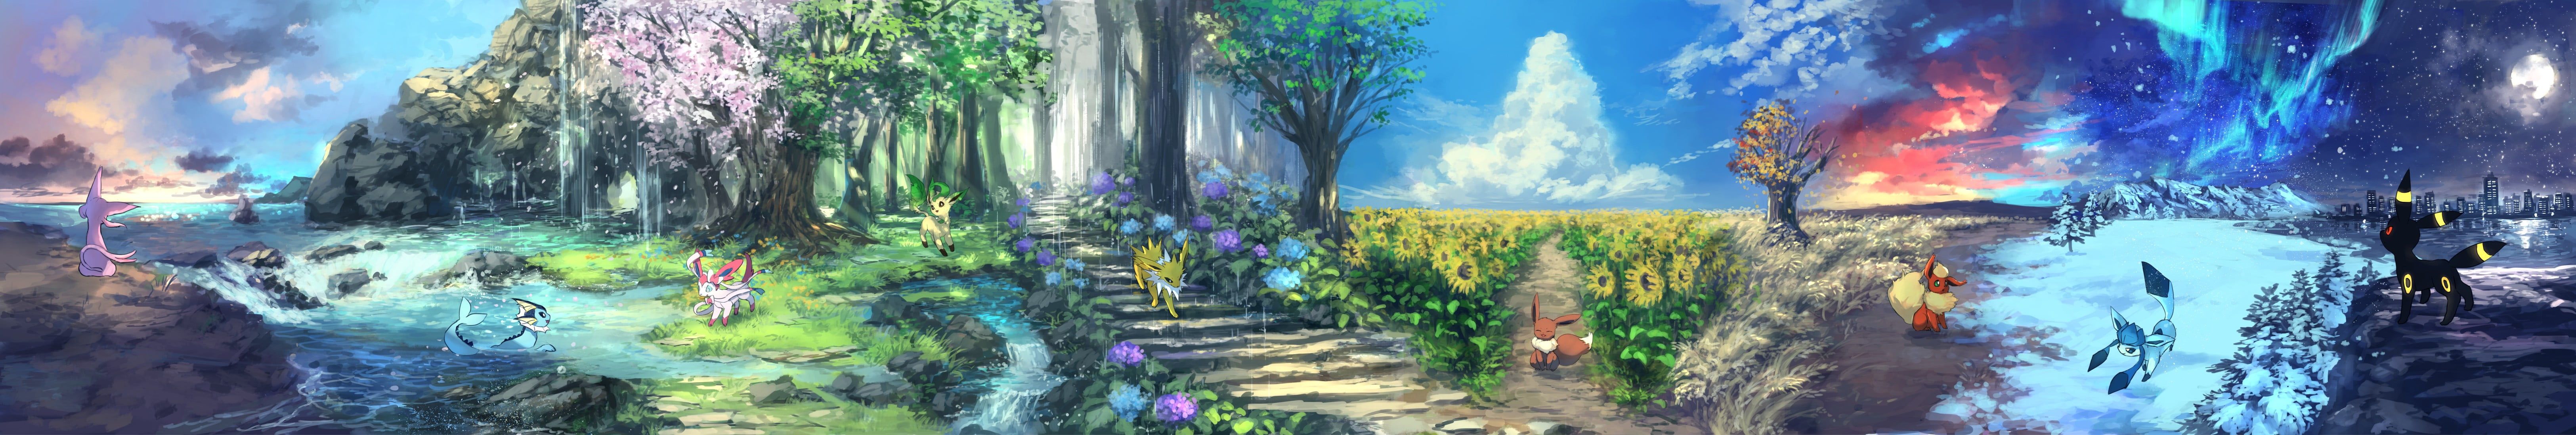 Pokemon Landscapes Wallpapers